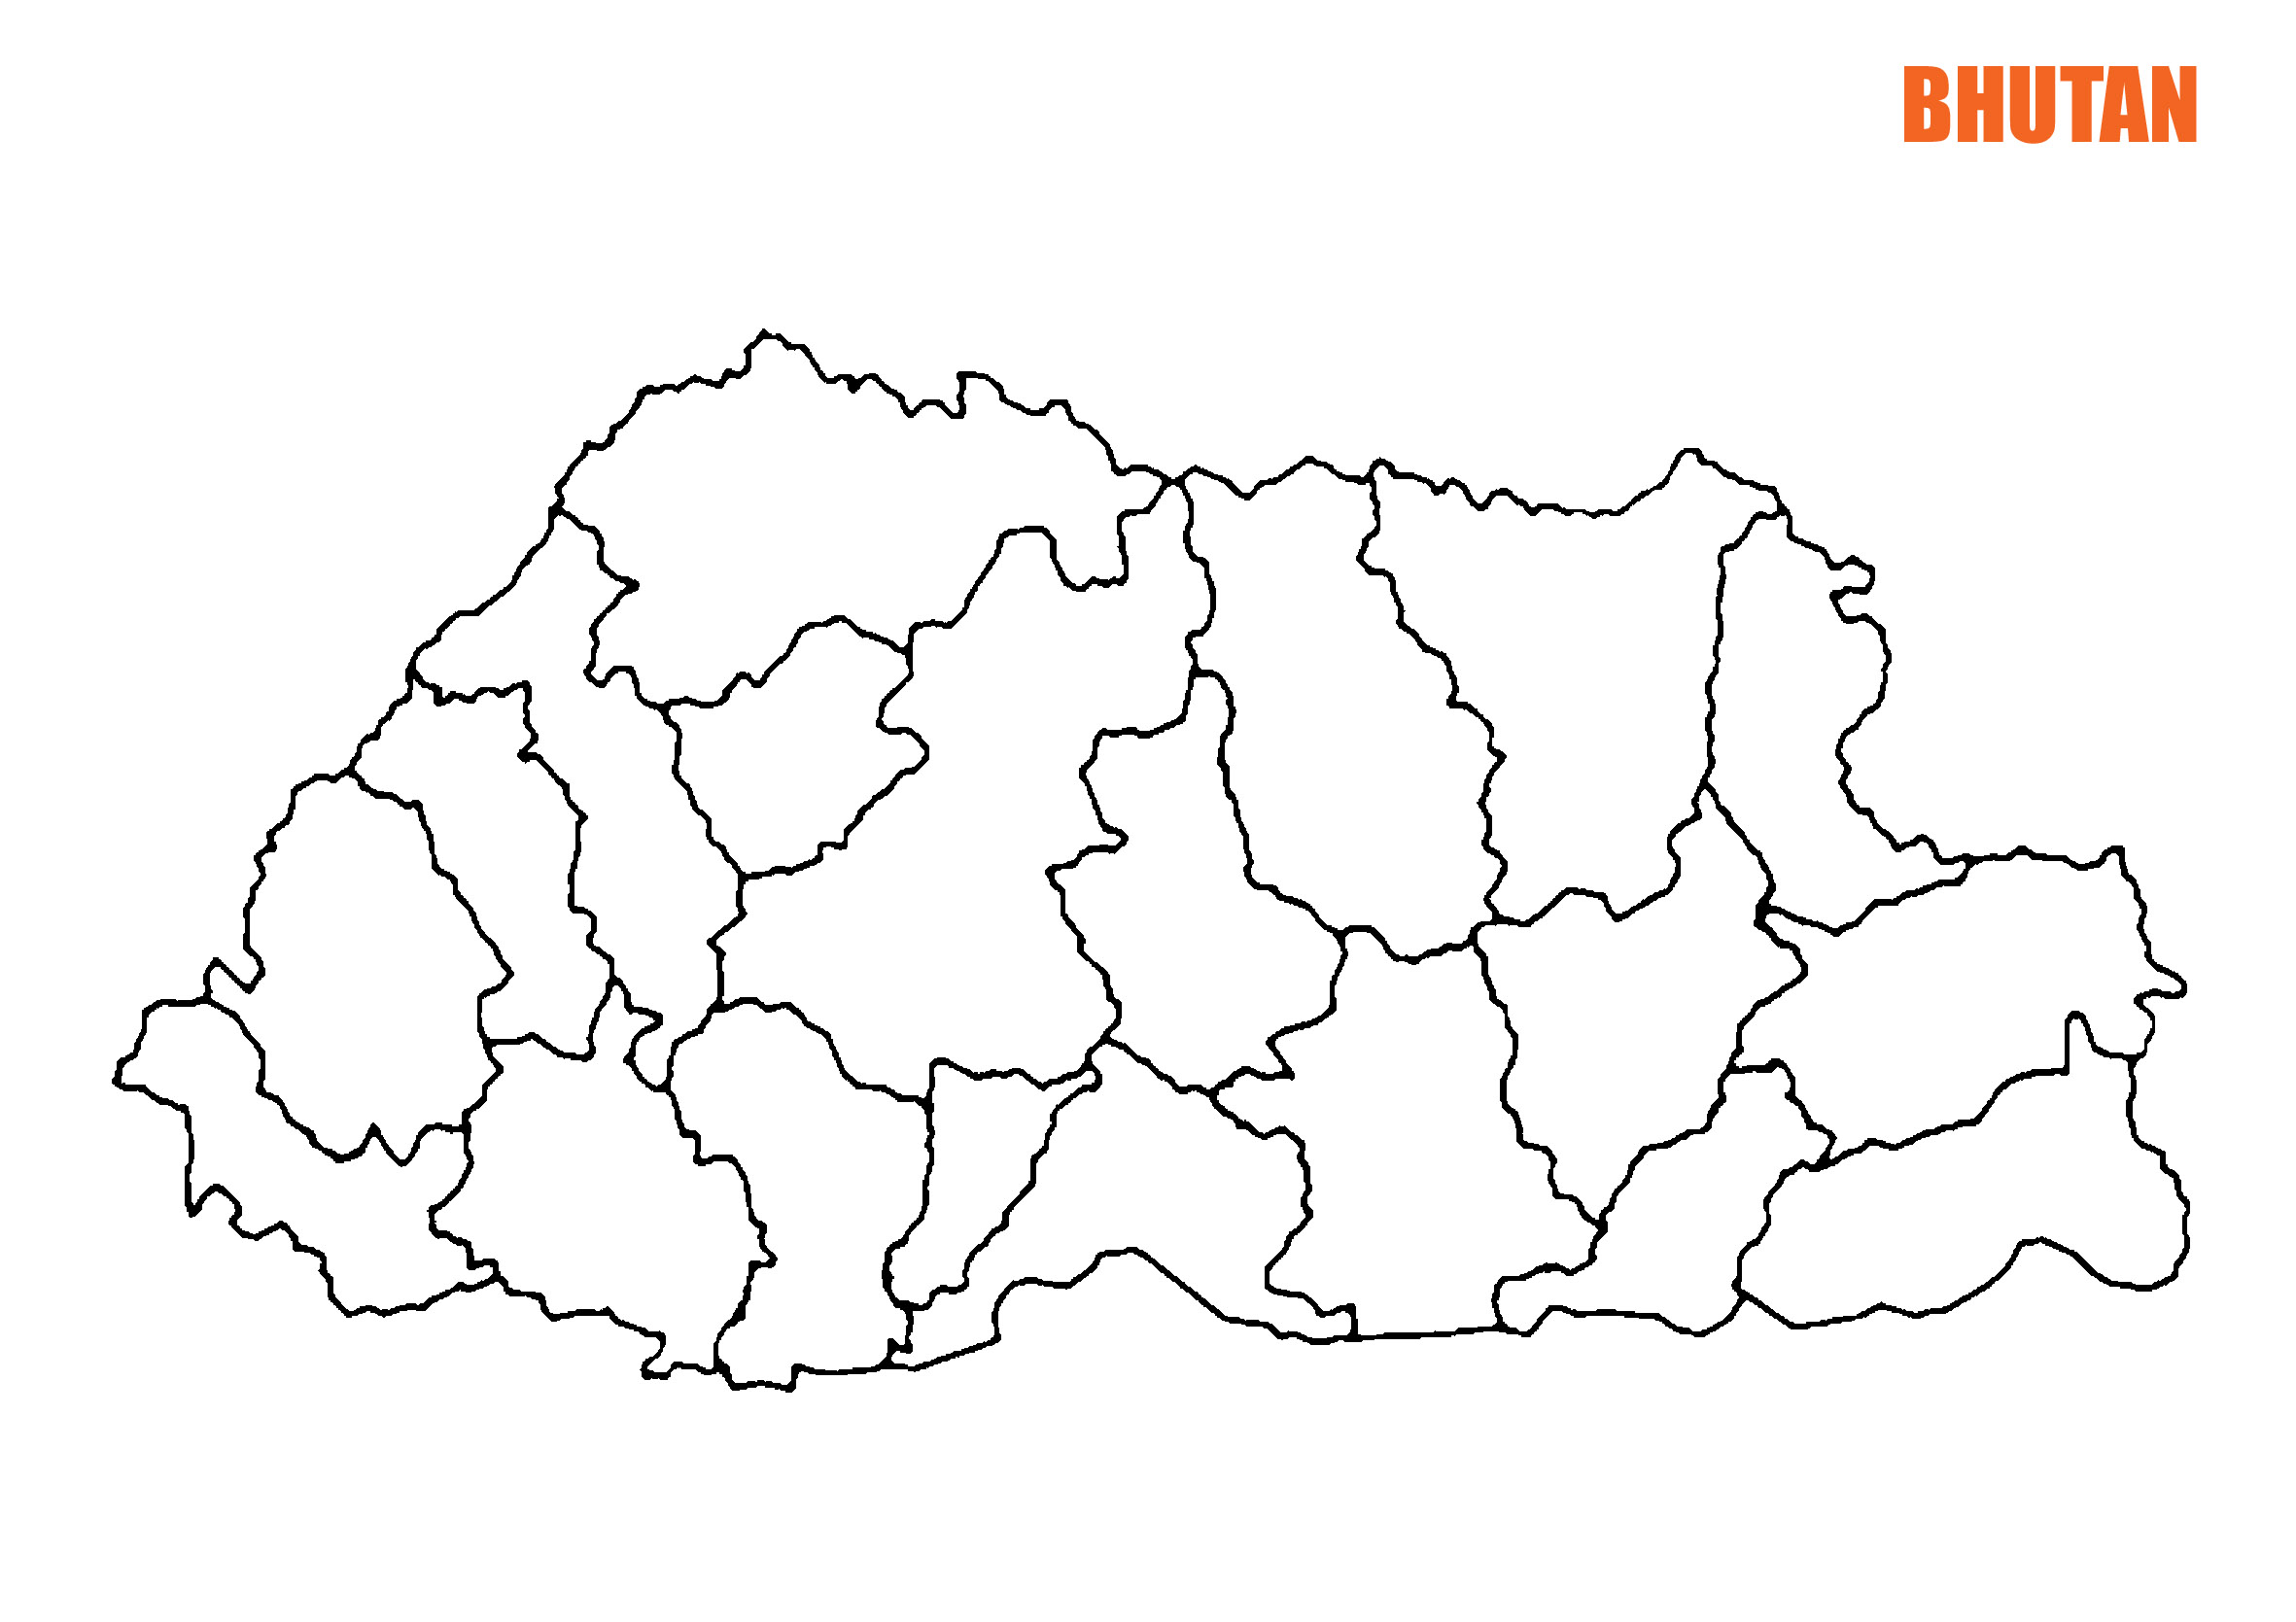 Bhutan map ouline